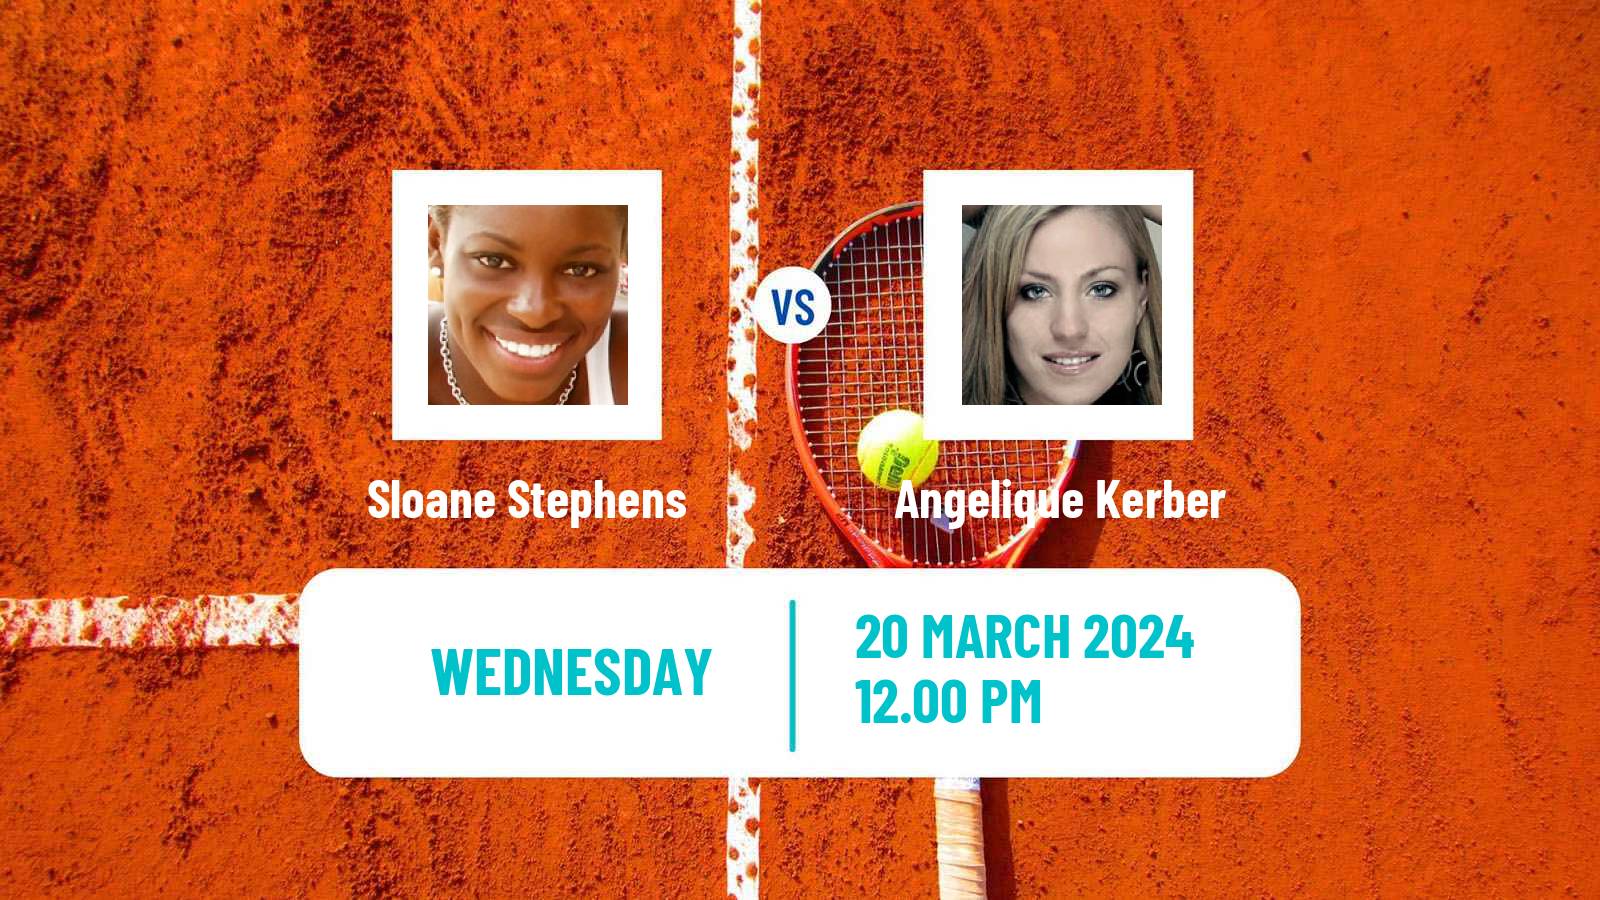 Tennis WTA Miami Sloane Stephens - Angelique Kerber